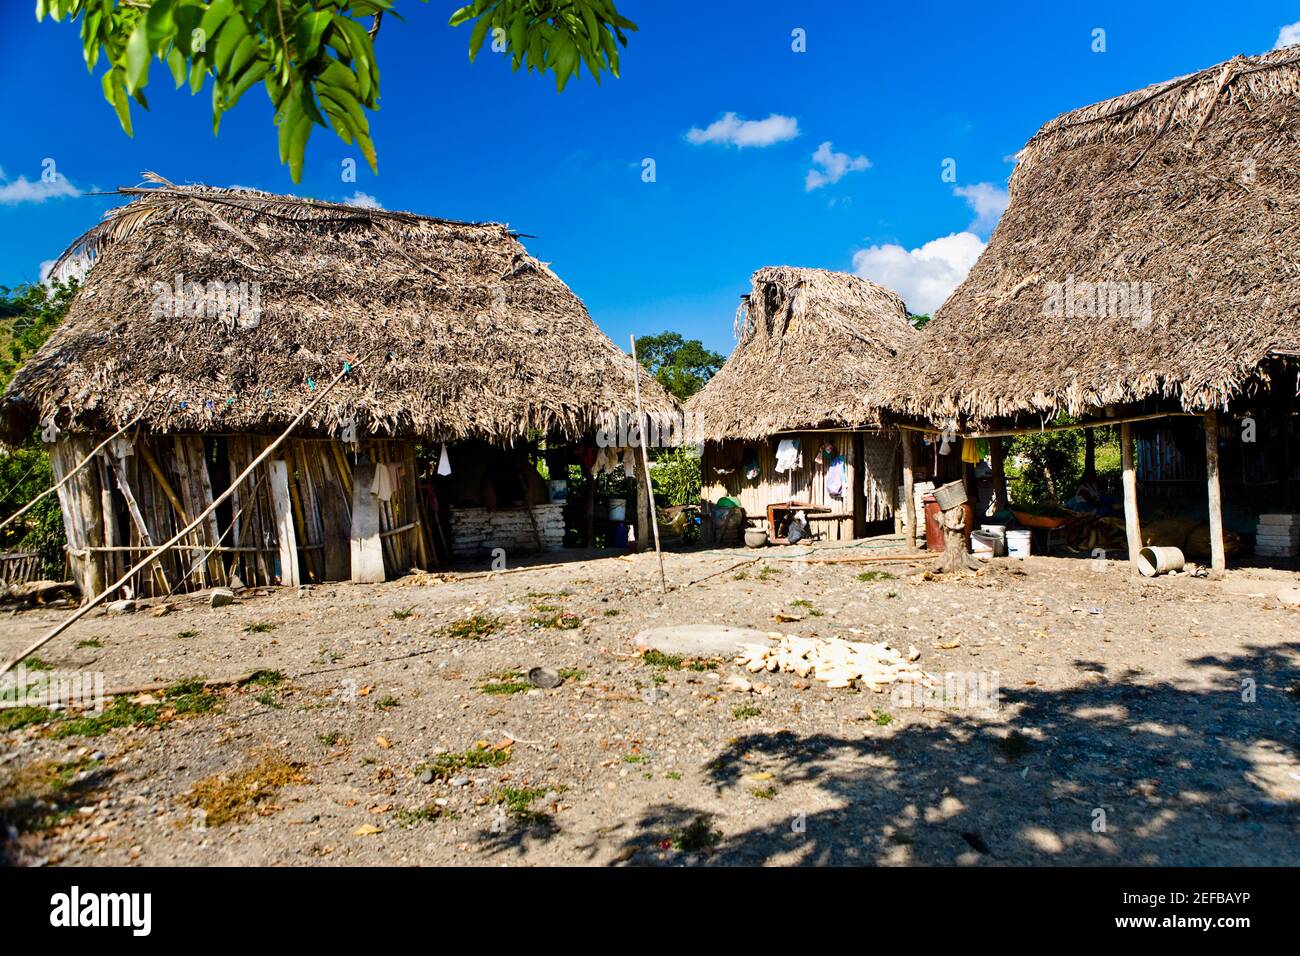 Houses in a village, Hidalgo, Papantla, Veracruz, Mexico Stock Photo